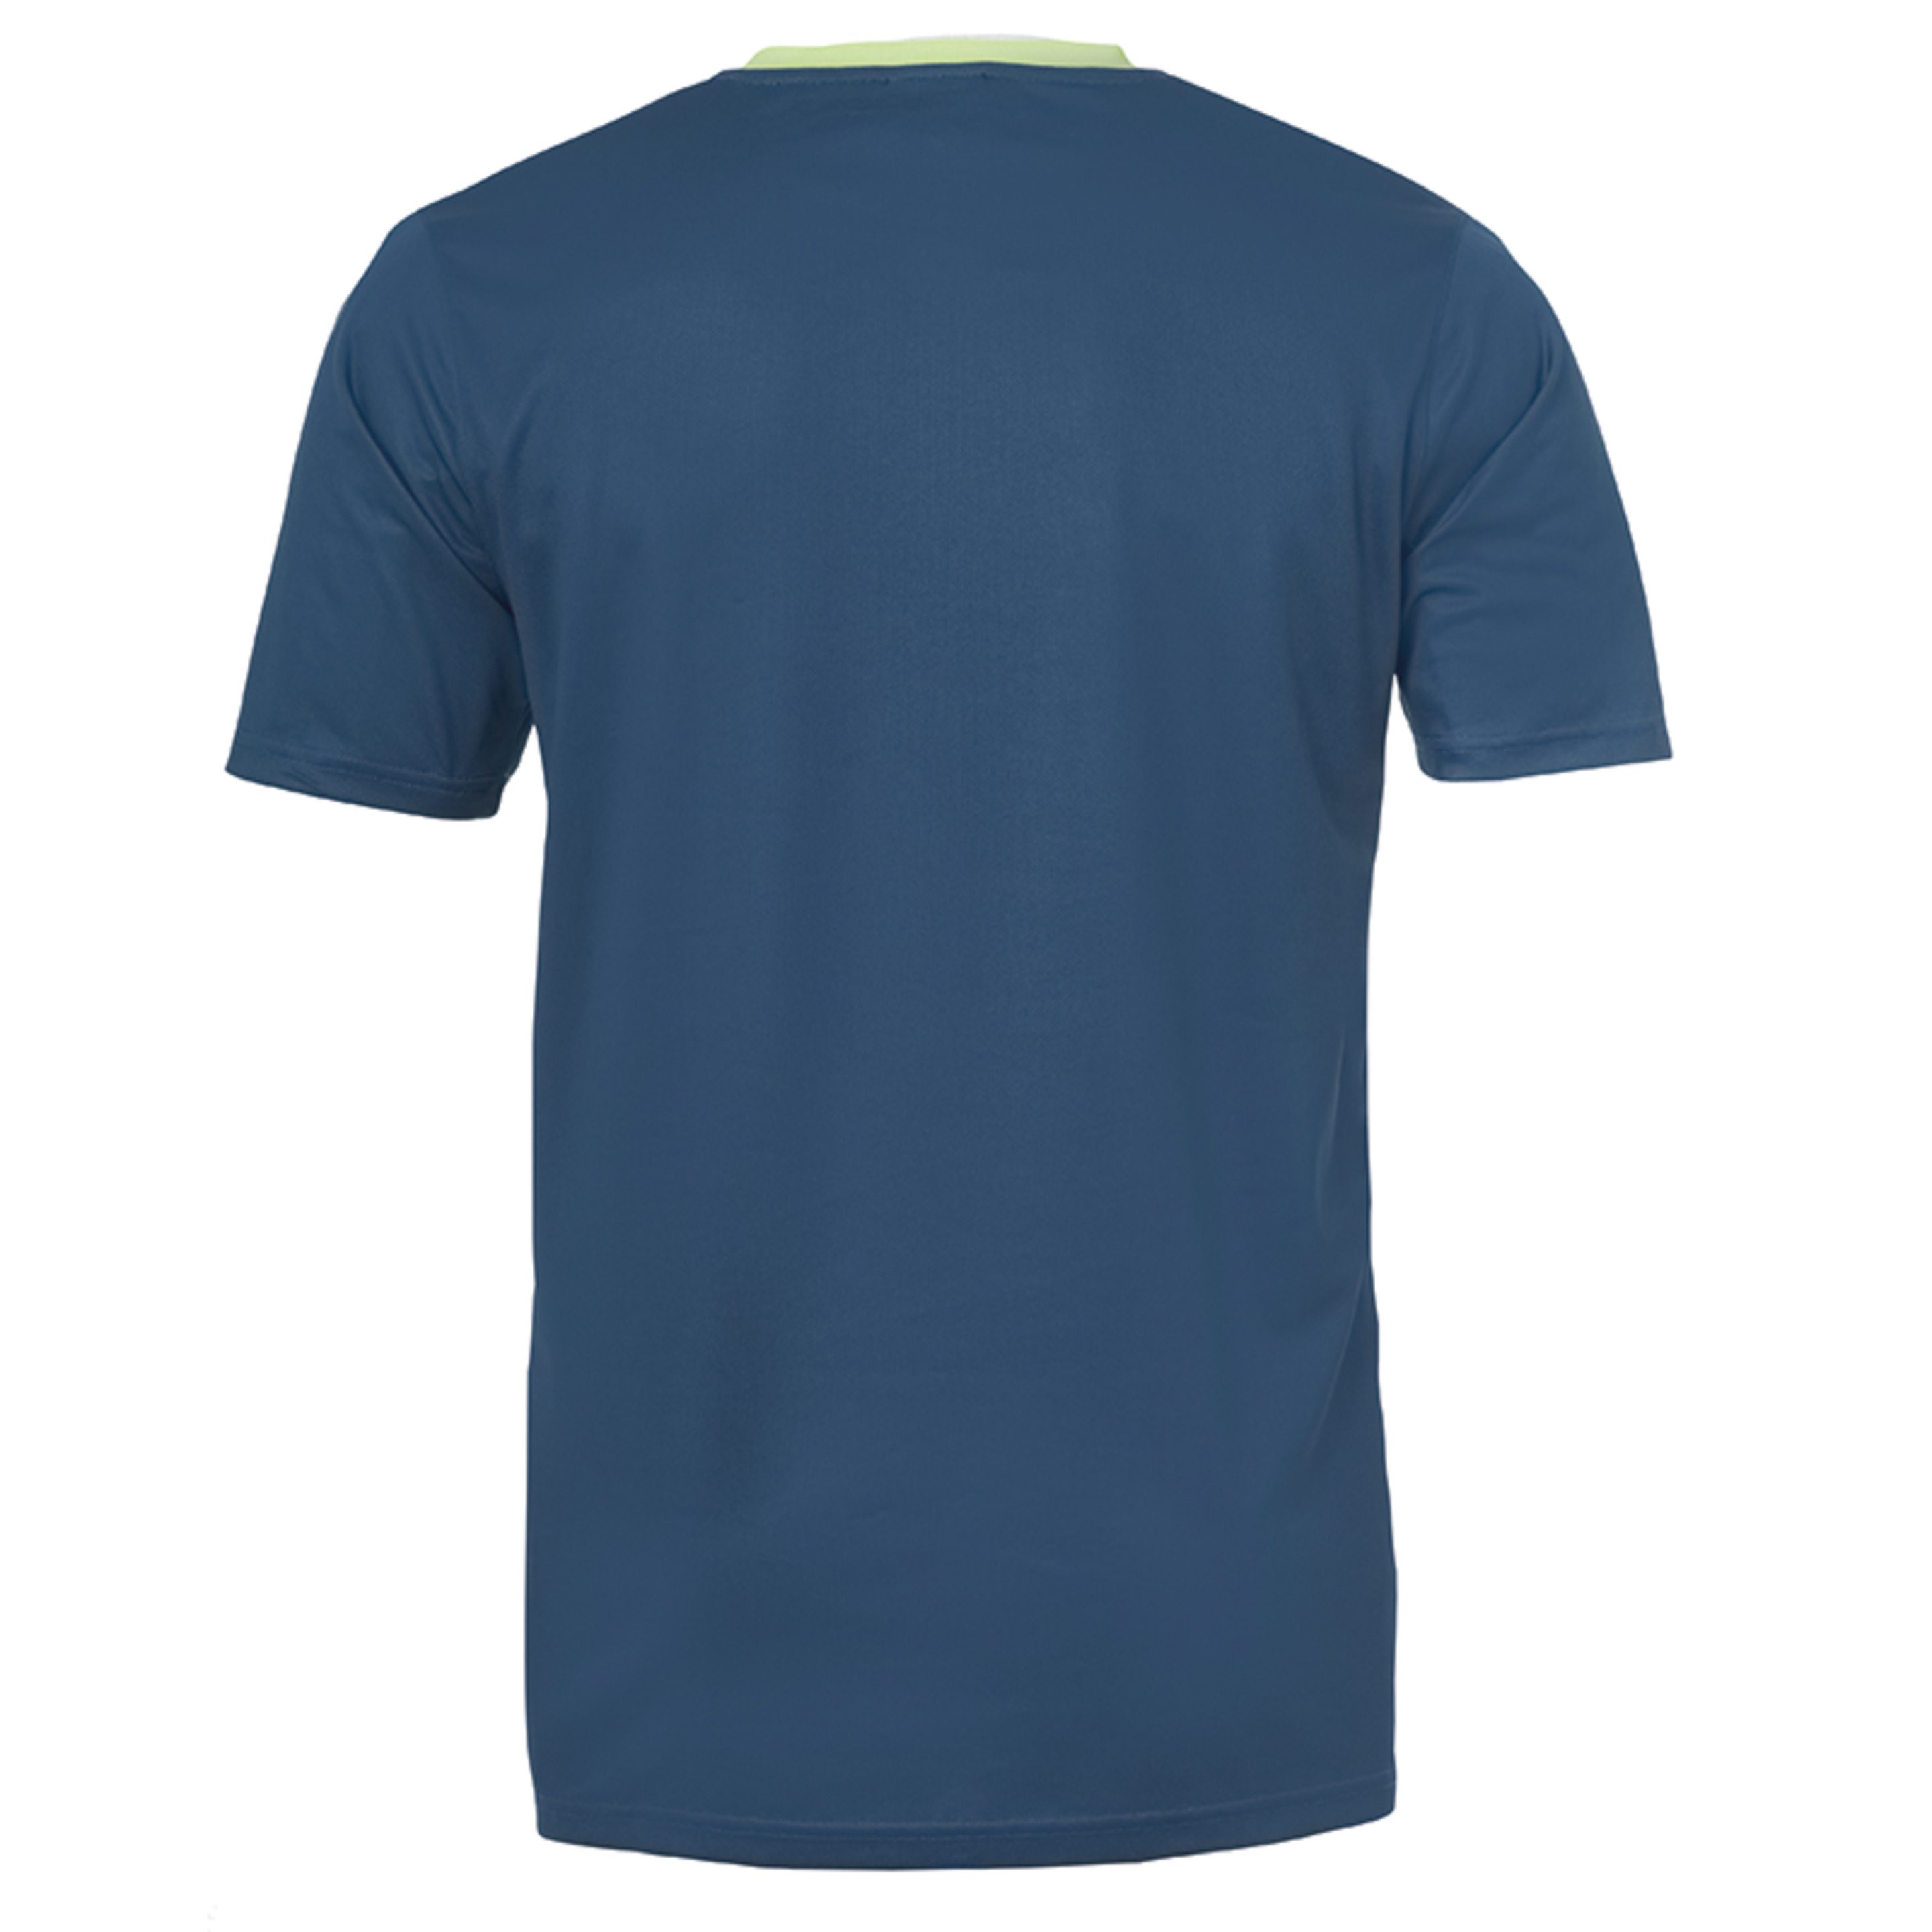 Goal Camiseta Mc Azul Uhlsport